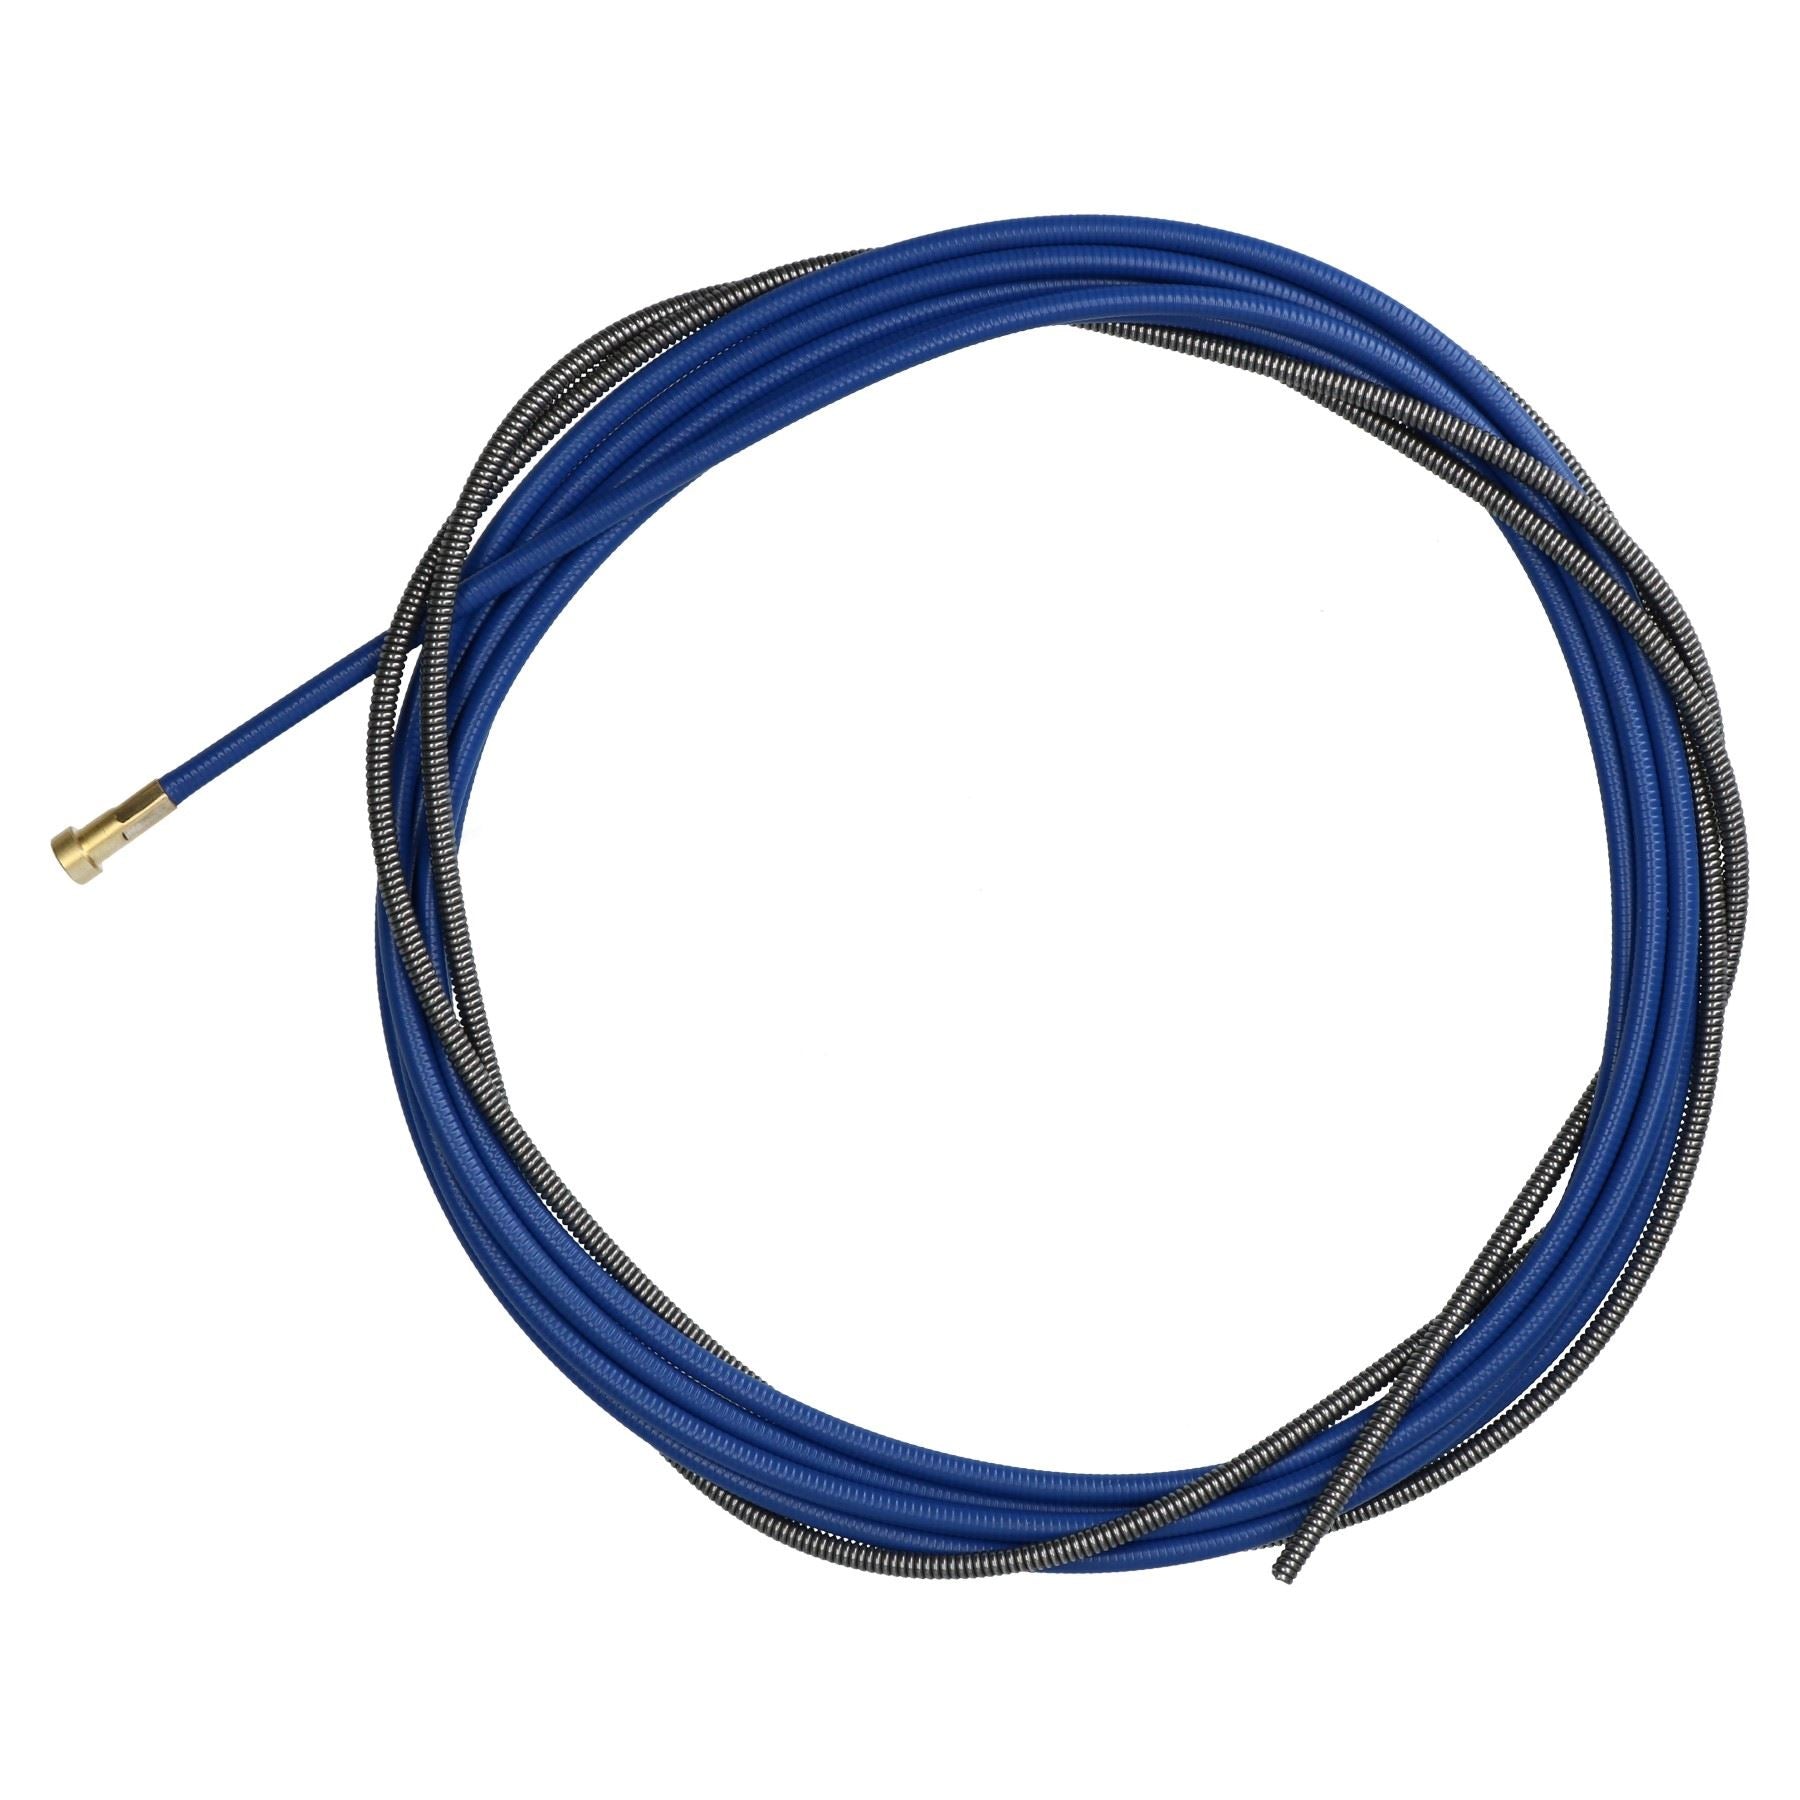 P.C. Liner Wire 0.6 - 0.9mm x 4M Welding Blue Steel Plastic Coated MIG Torch